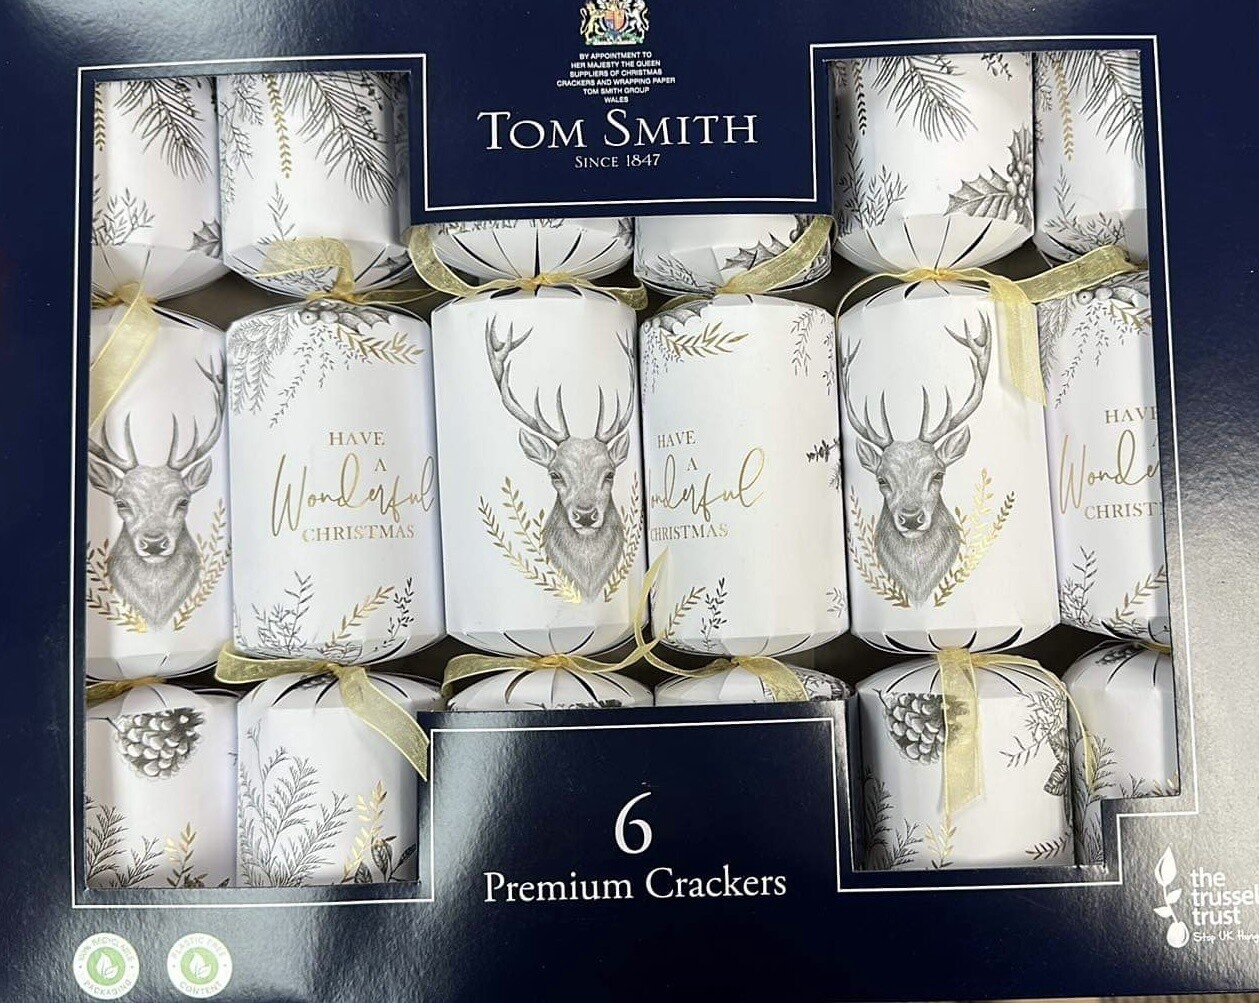 Tom Smith Christmas Crackers, Design: Have a Wonderful Christmas